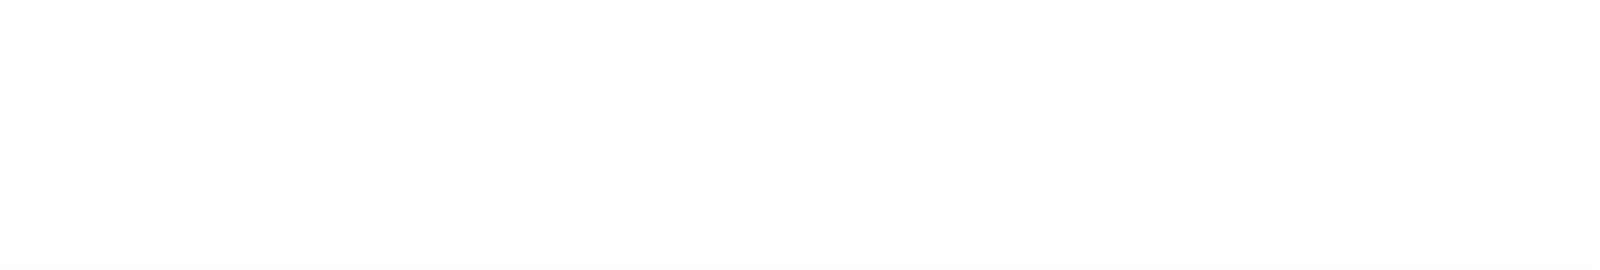 the GazettE NEW ALBUM『NINTH』発売記念 スペシャルトーク＆サイン会 or 限定グッズプレゼントに関する注意事項